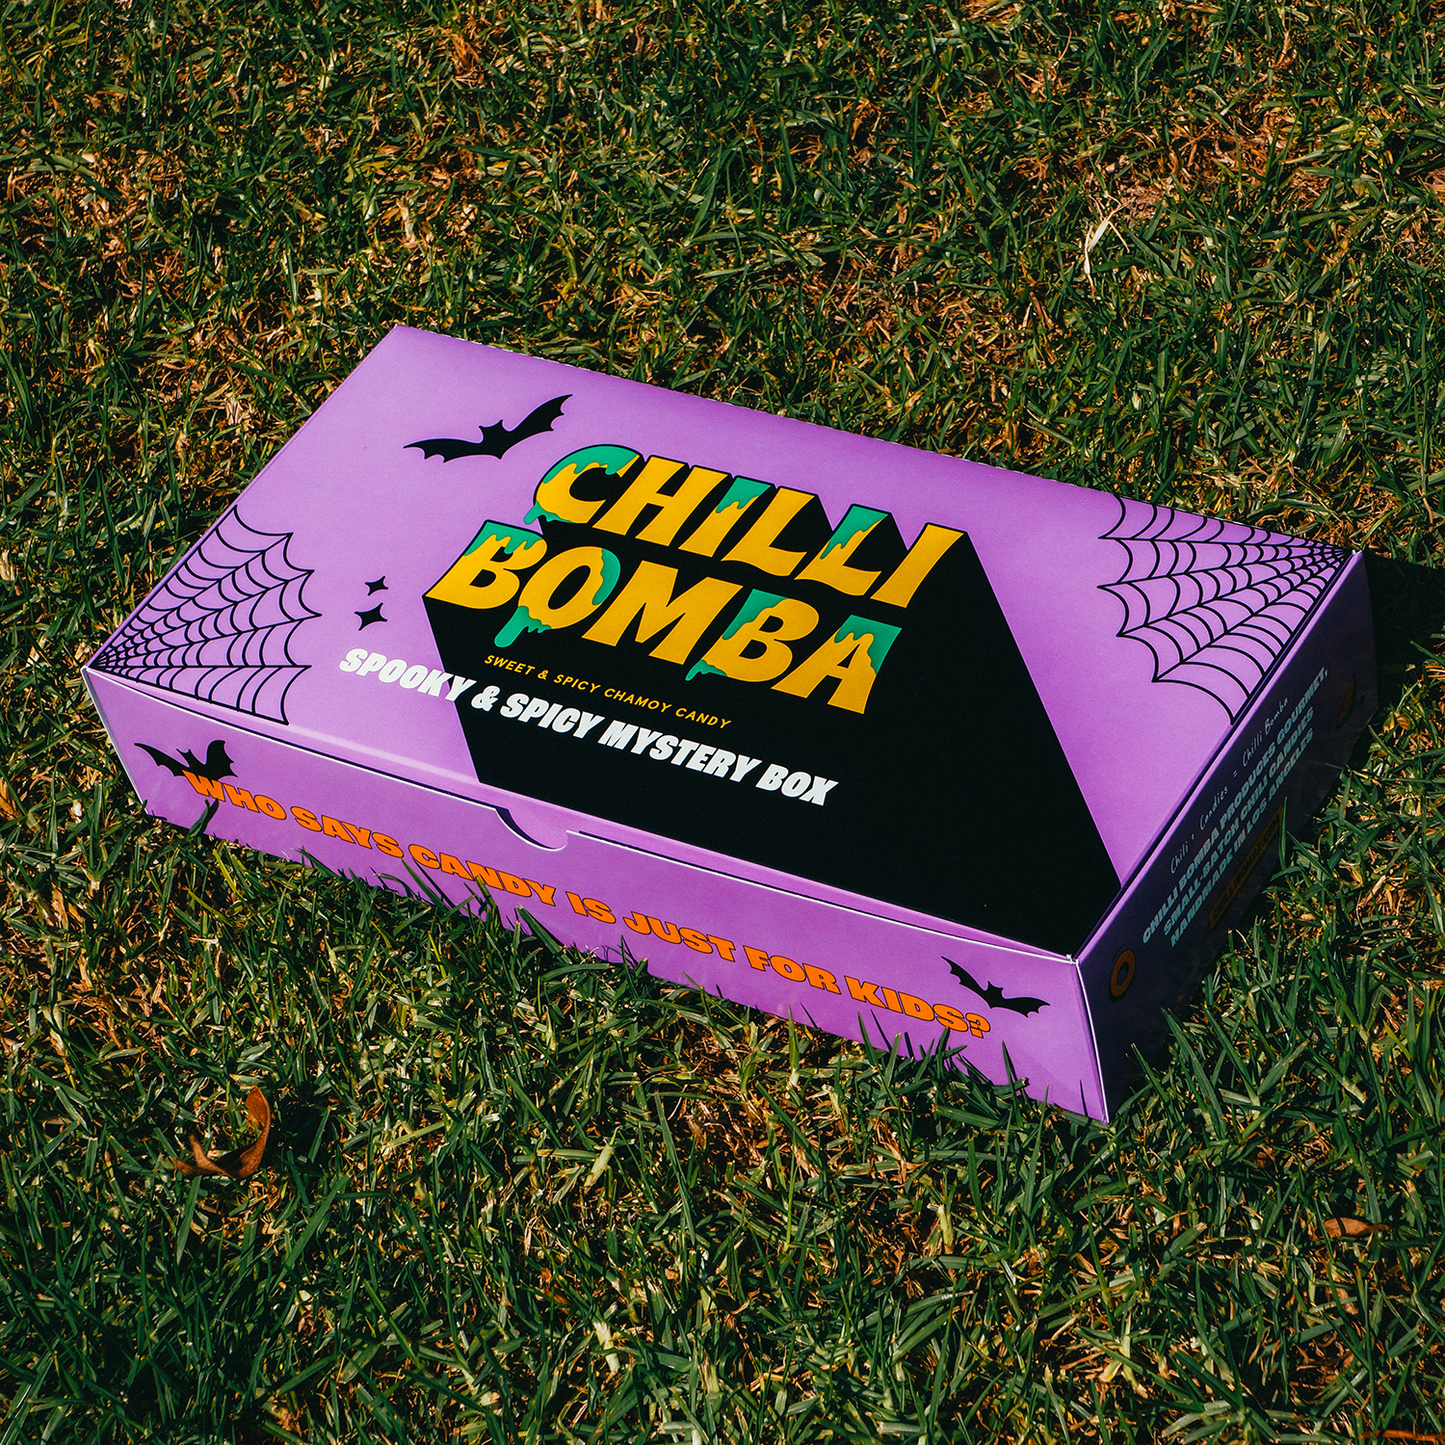 Chilli Bomba's Spooky & Spicy Mystery Box